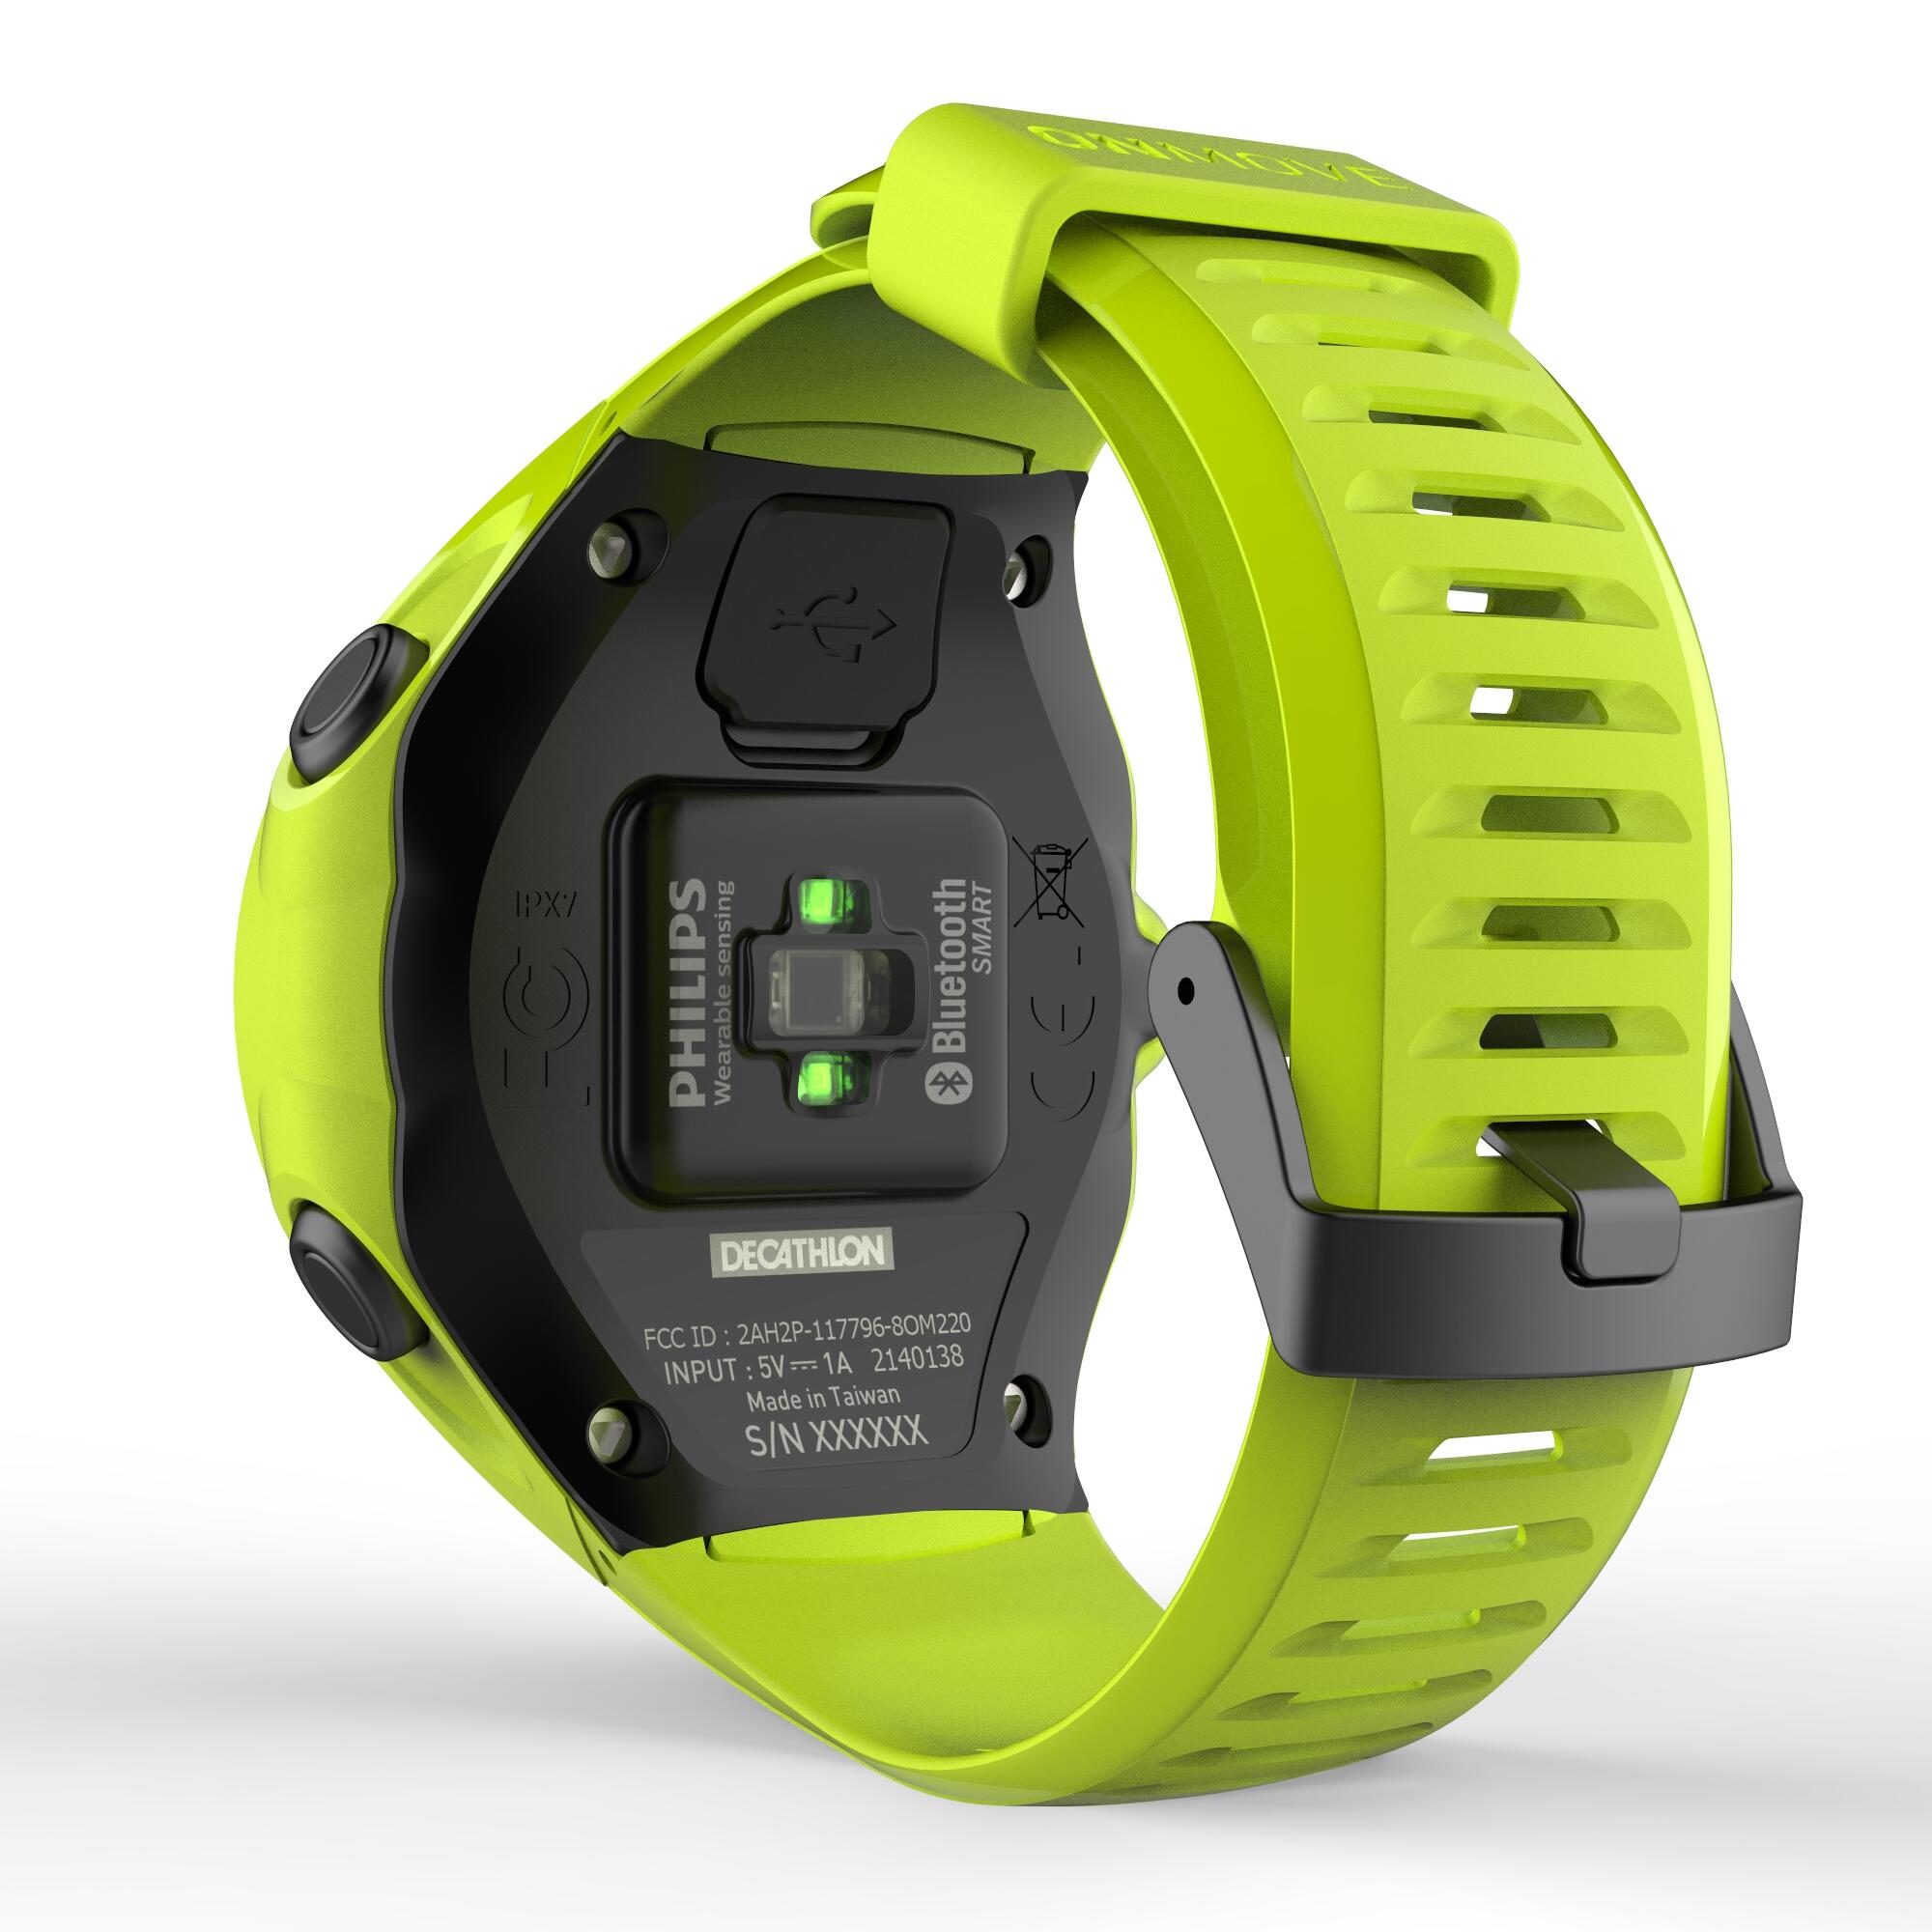 ONmove 500 GPS running watch and wrist heart rate monitor - yellow 2/17